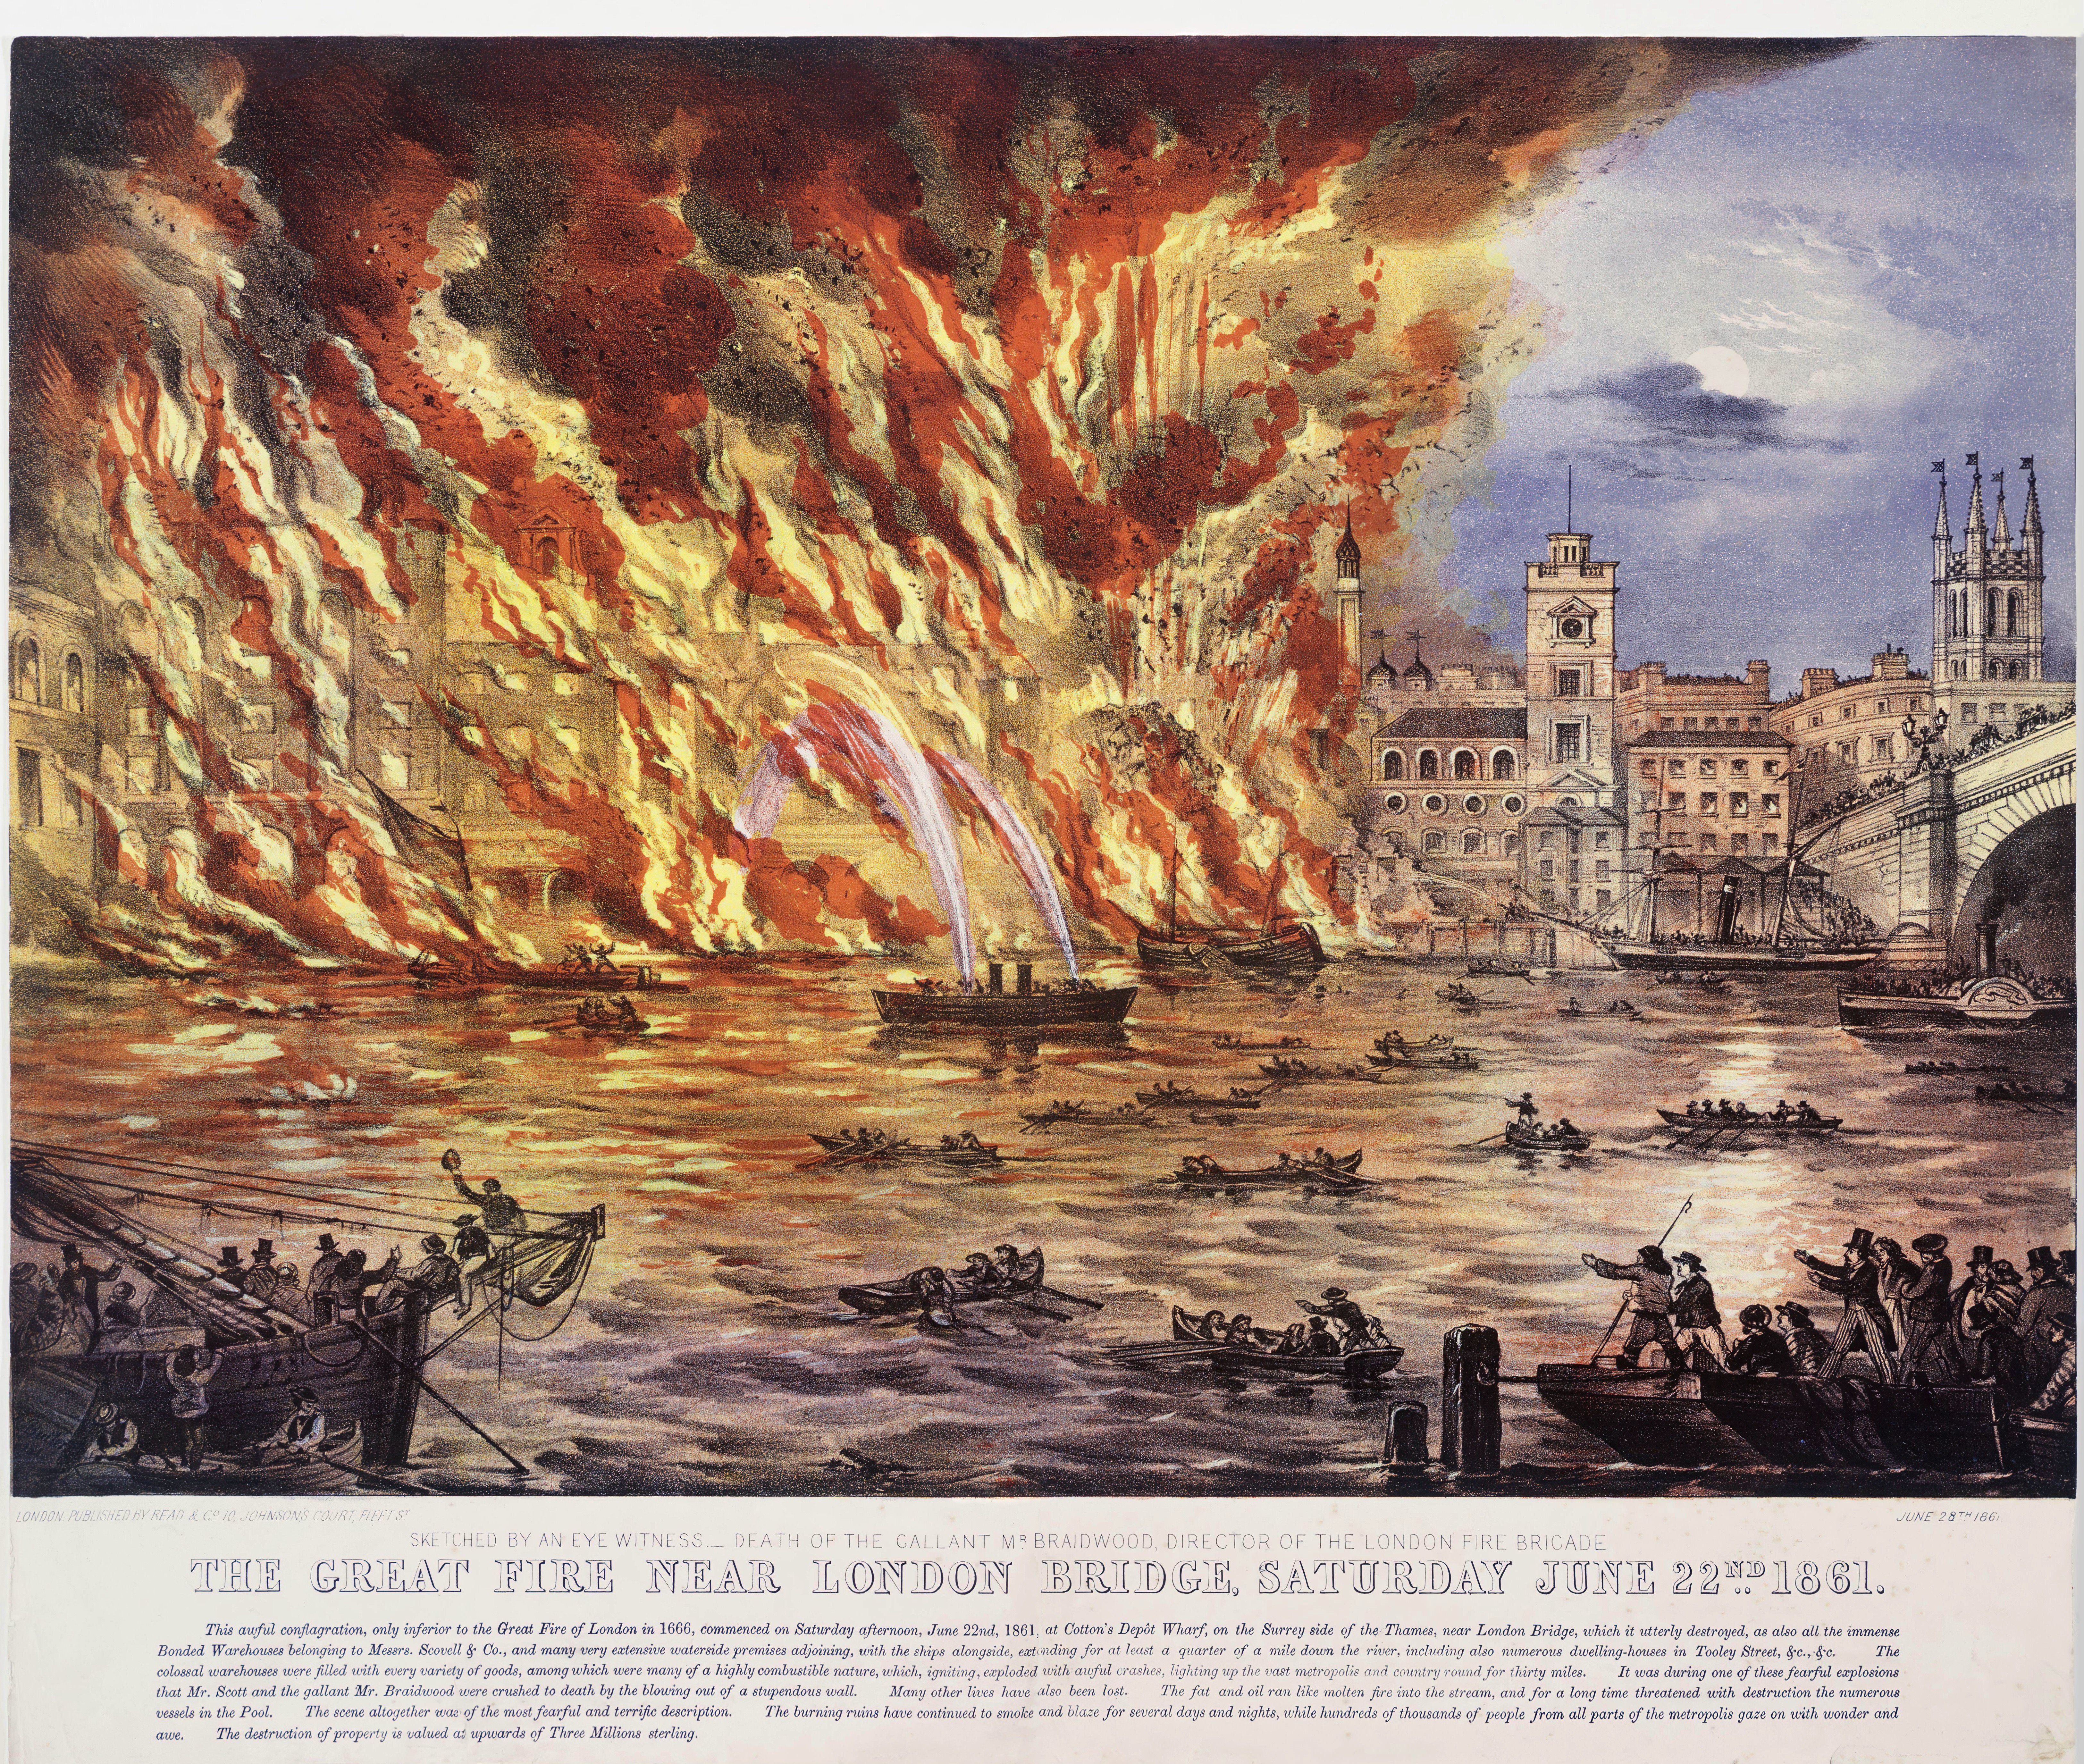 The Great Fire Near London Bridge Saturday, June 22nd 1861